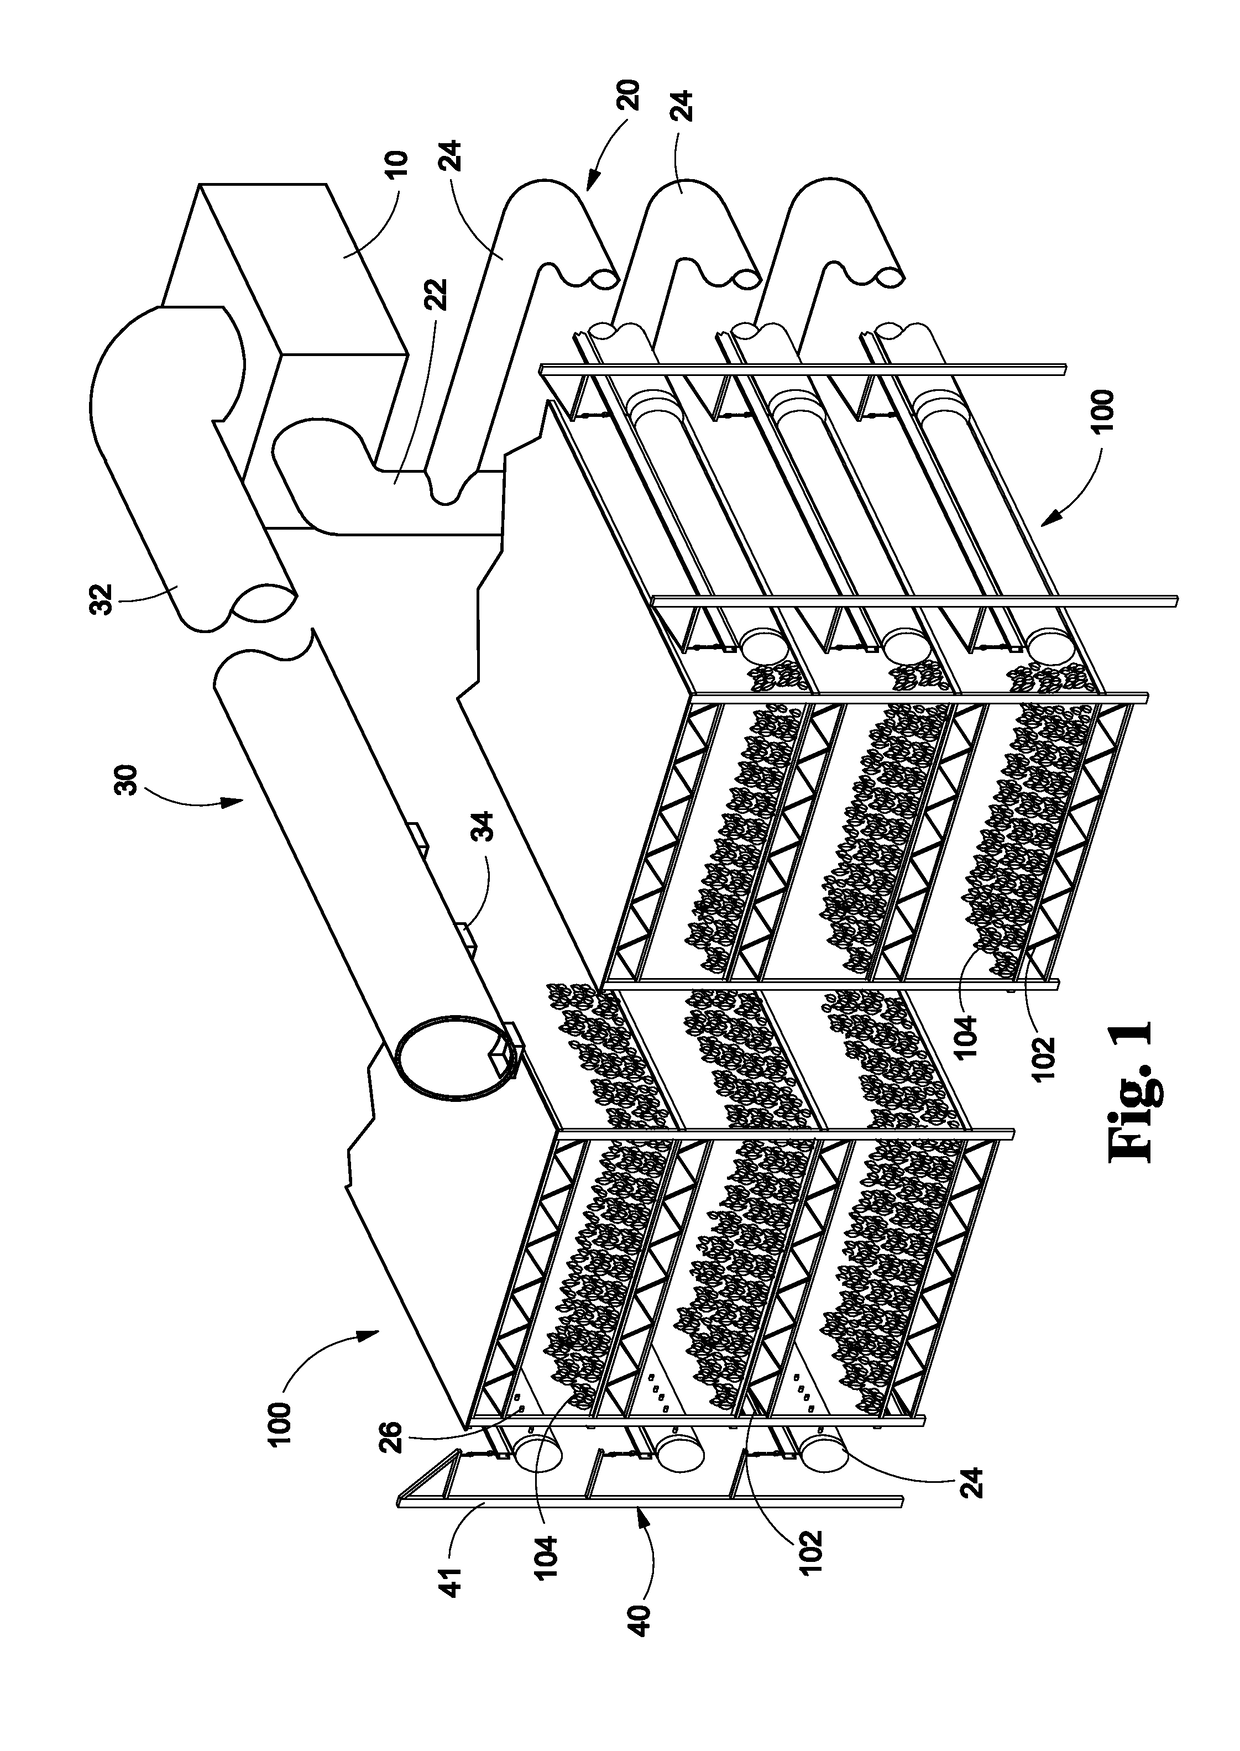 Multi-level horizontal air flow distribution system